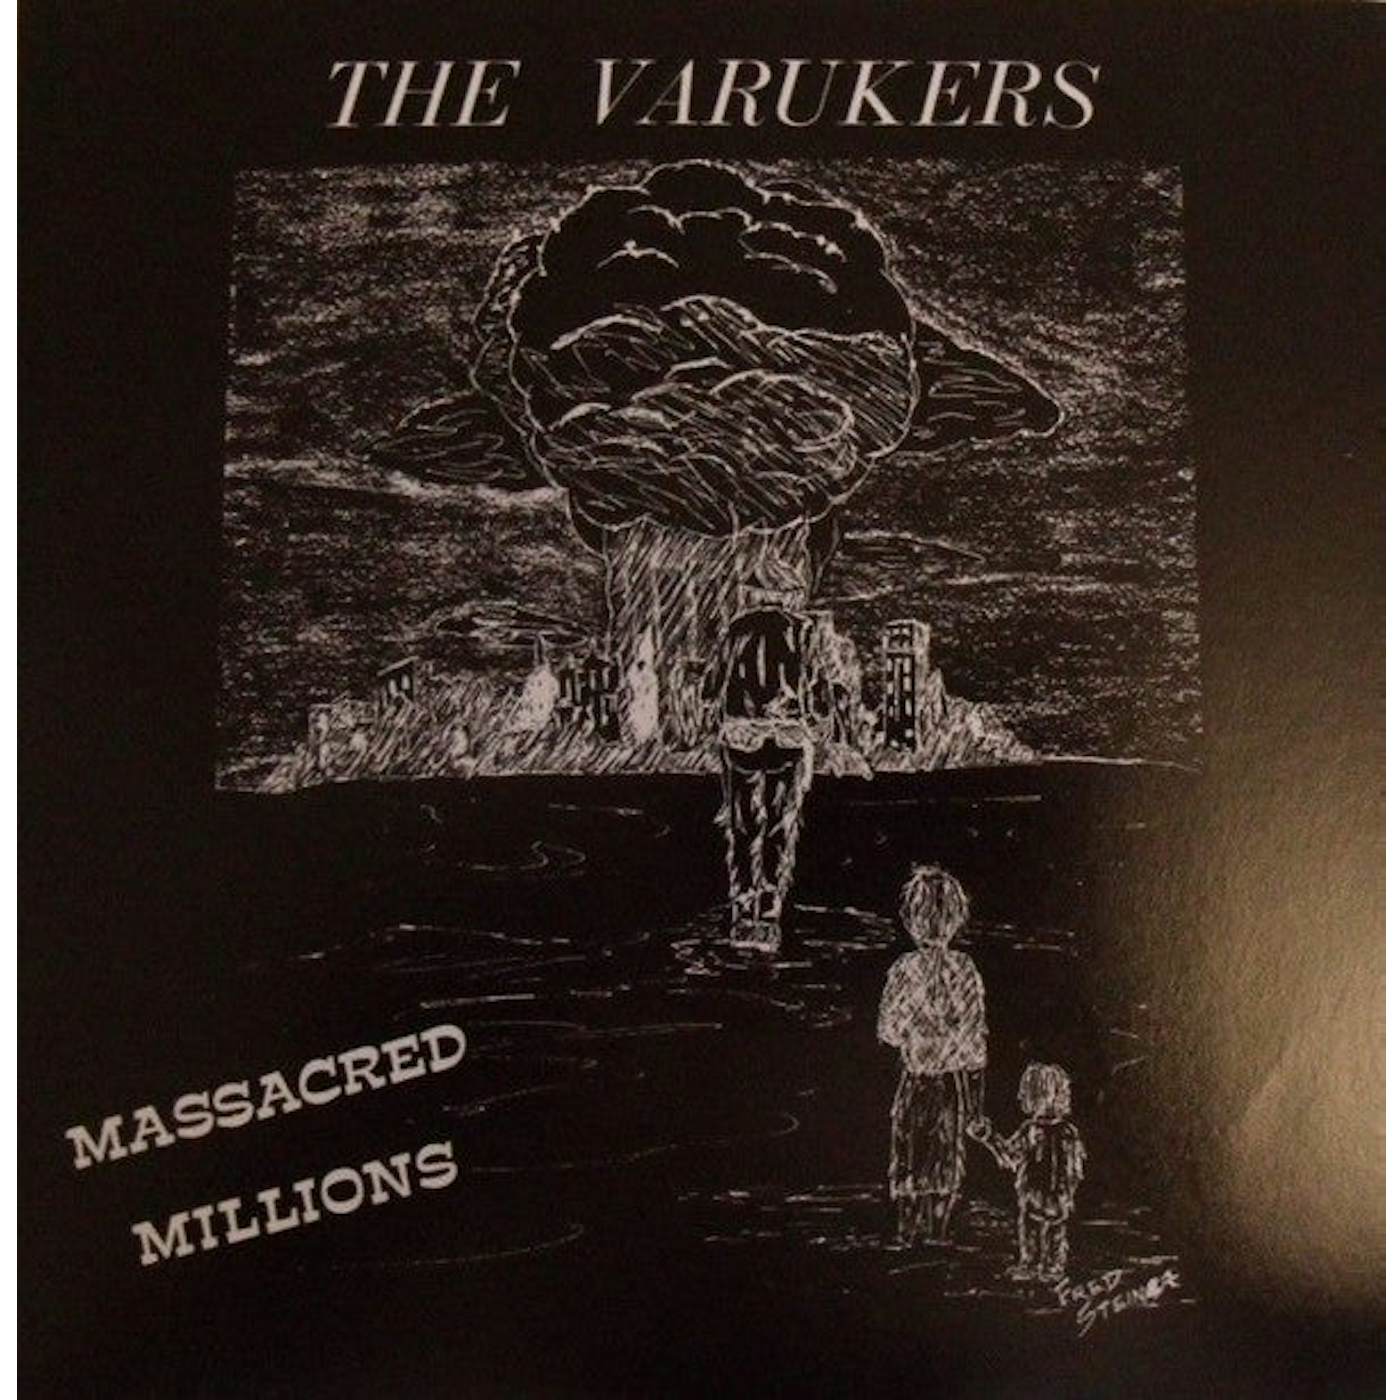 The Varukers ‎– Massacred Millions 7" record